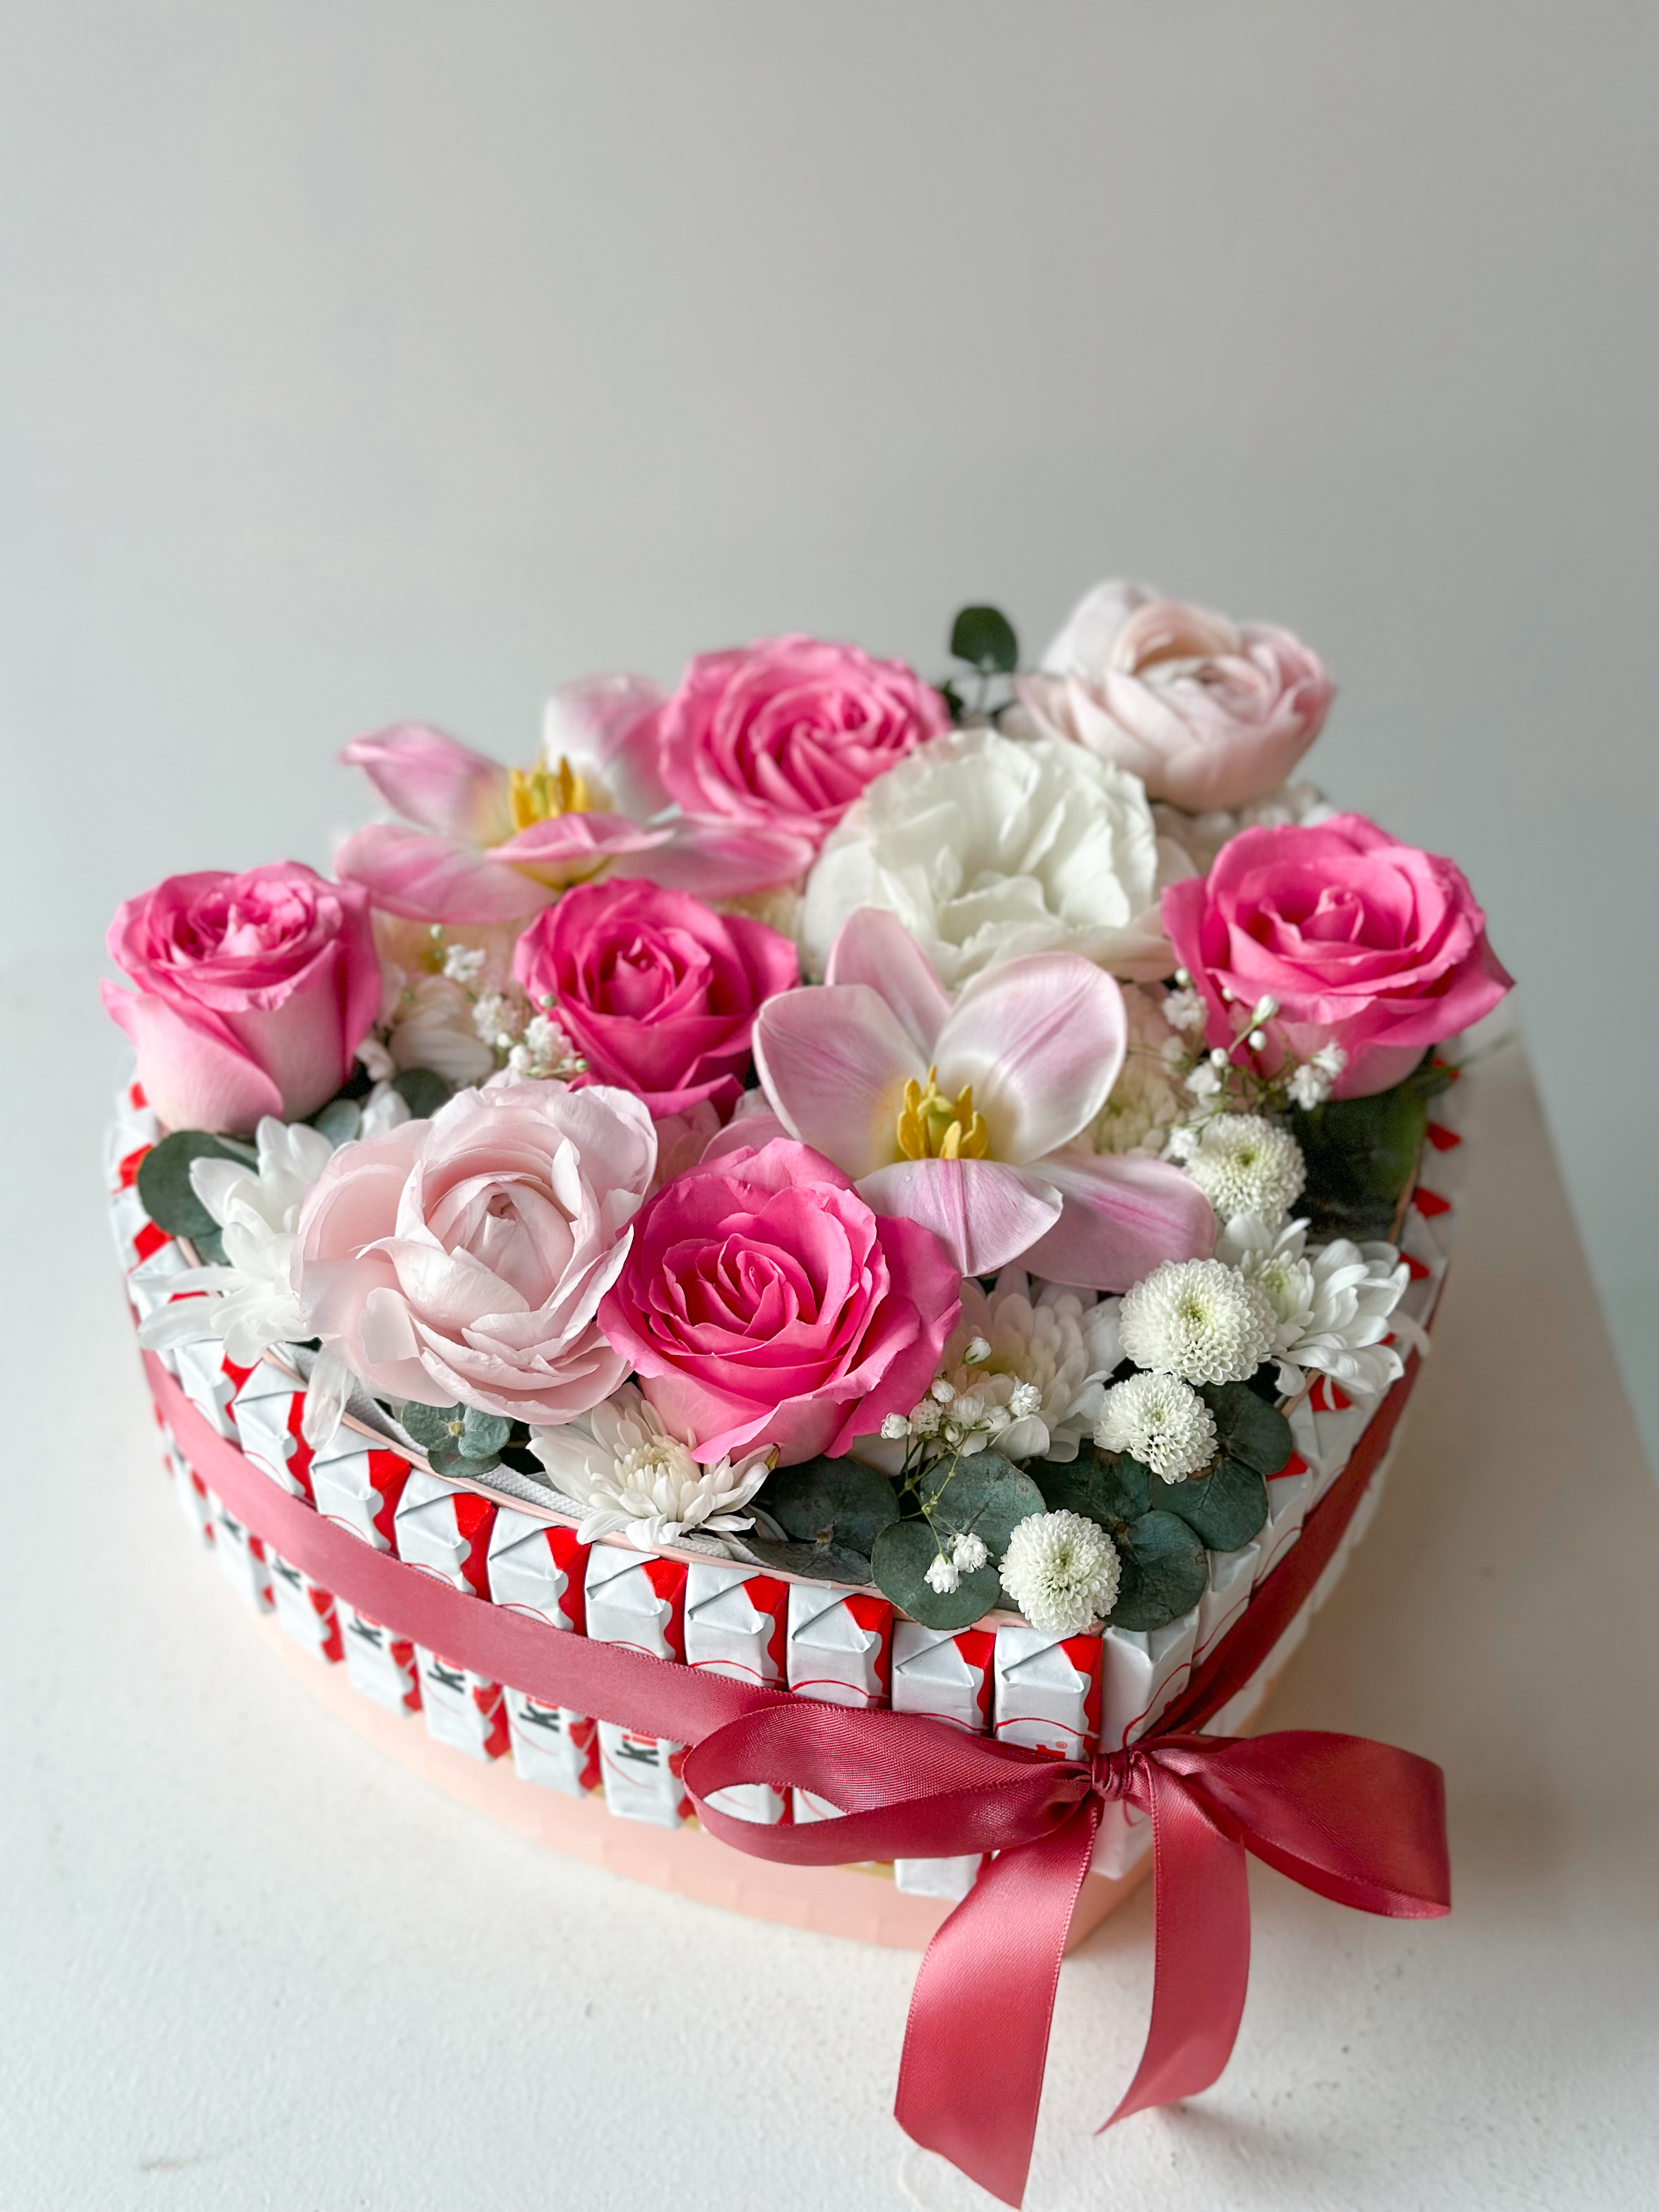 Композиция "Sezim". Роза, хризантема, тюльпан и kinder шоколад в коробке